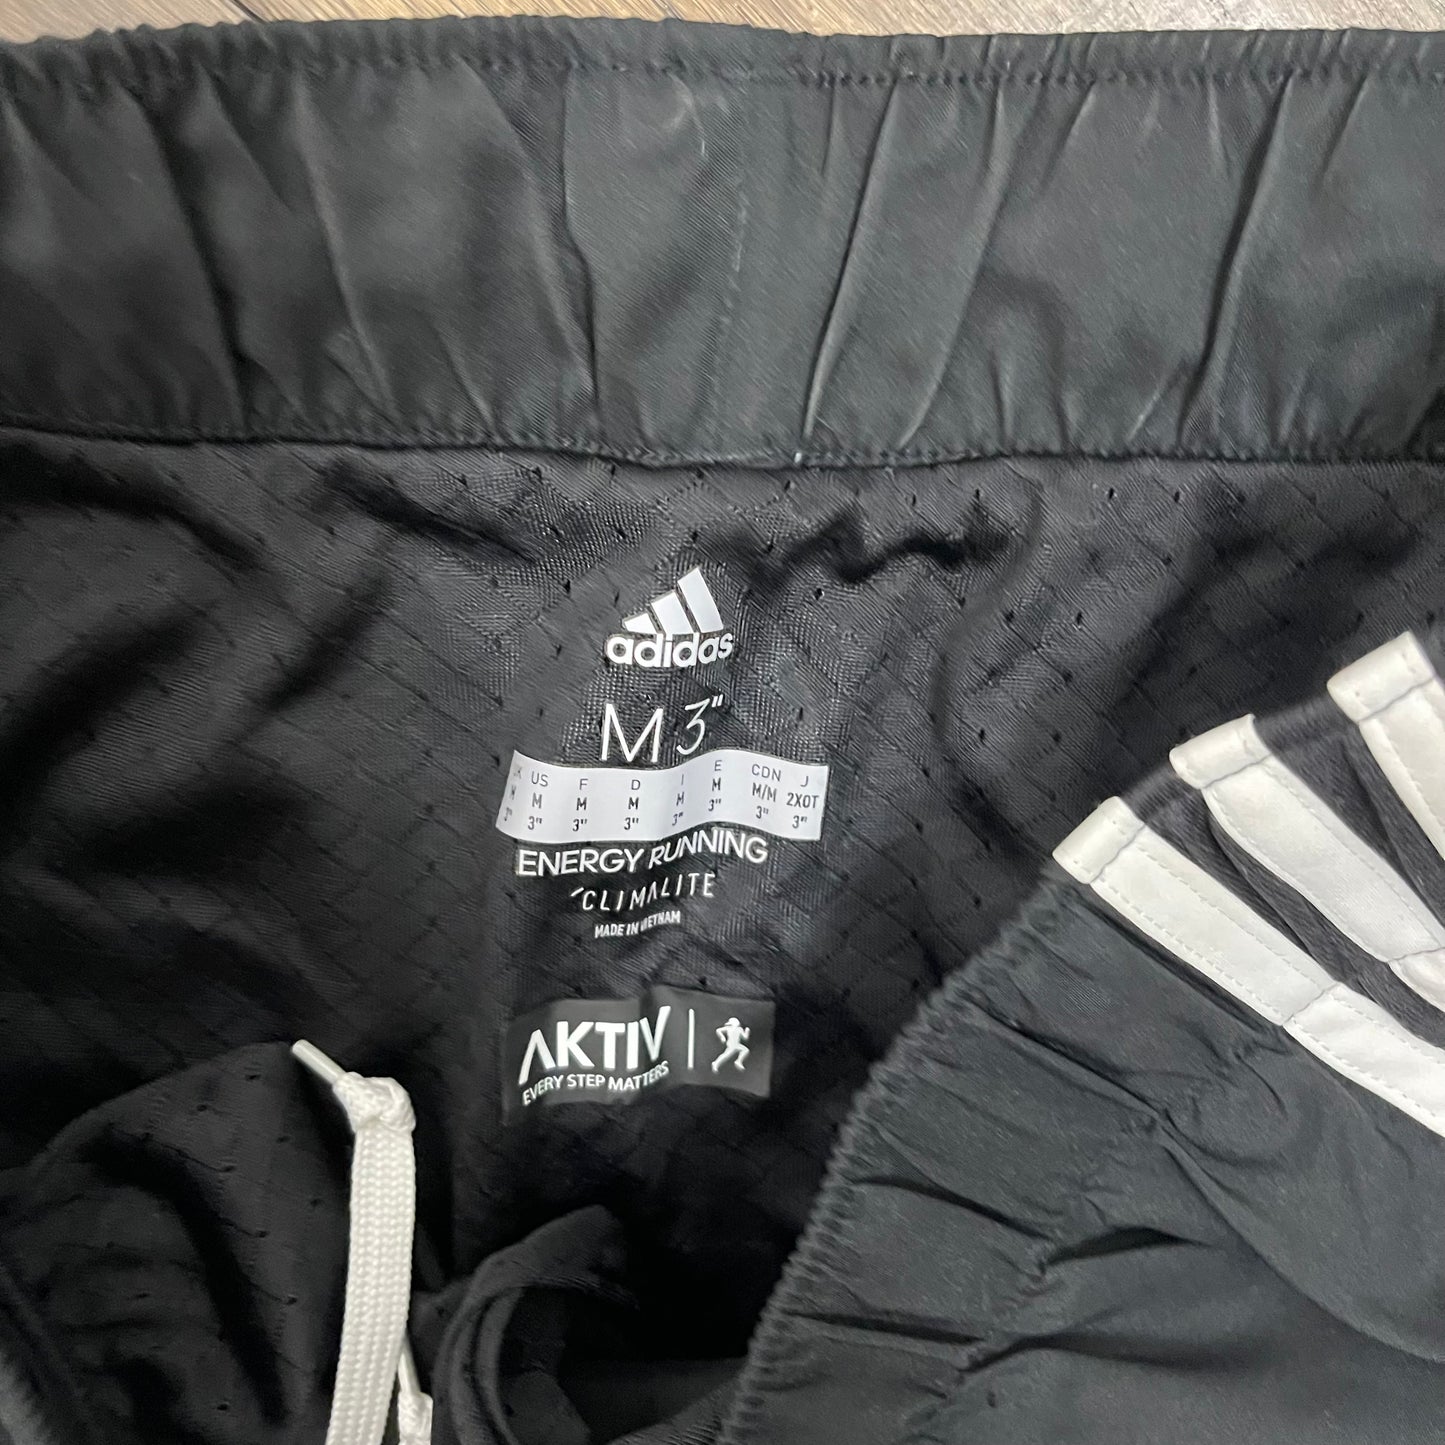 Adidas Sporty Mini Shorts